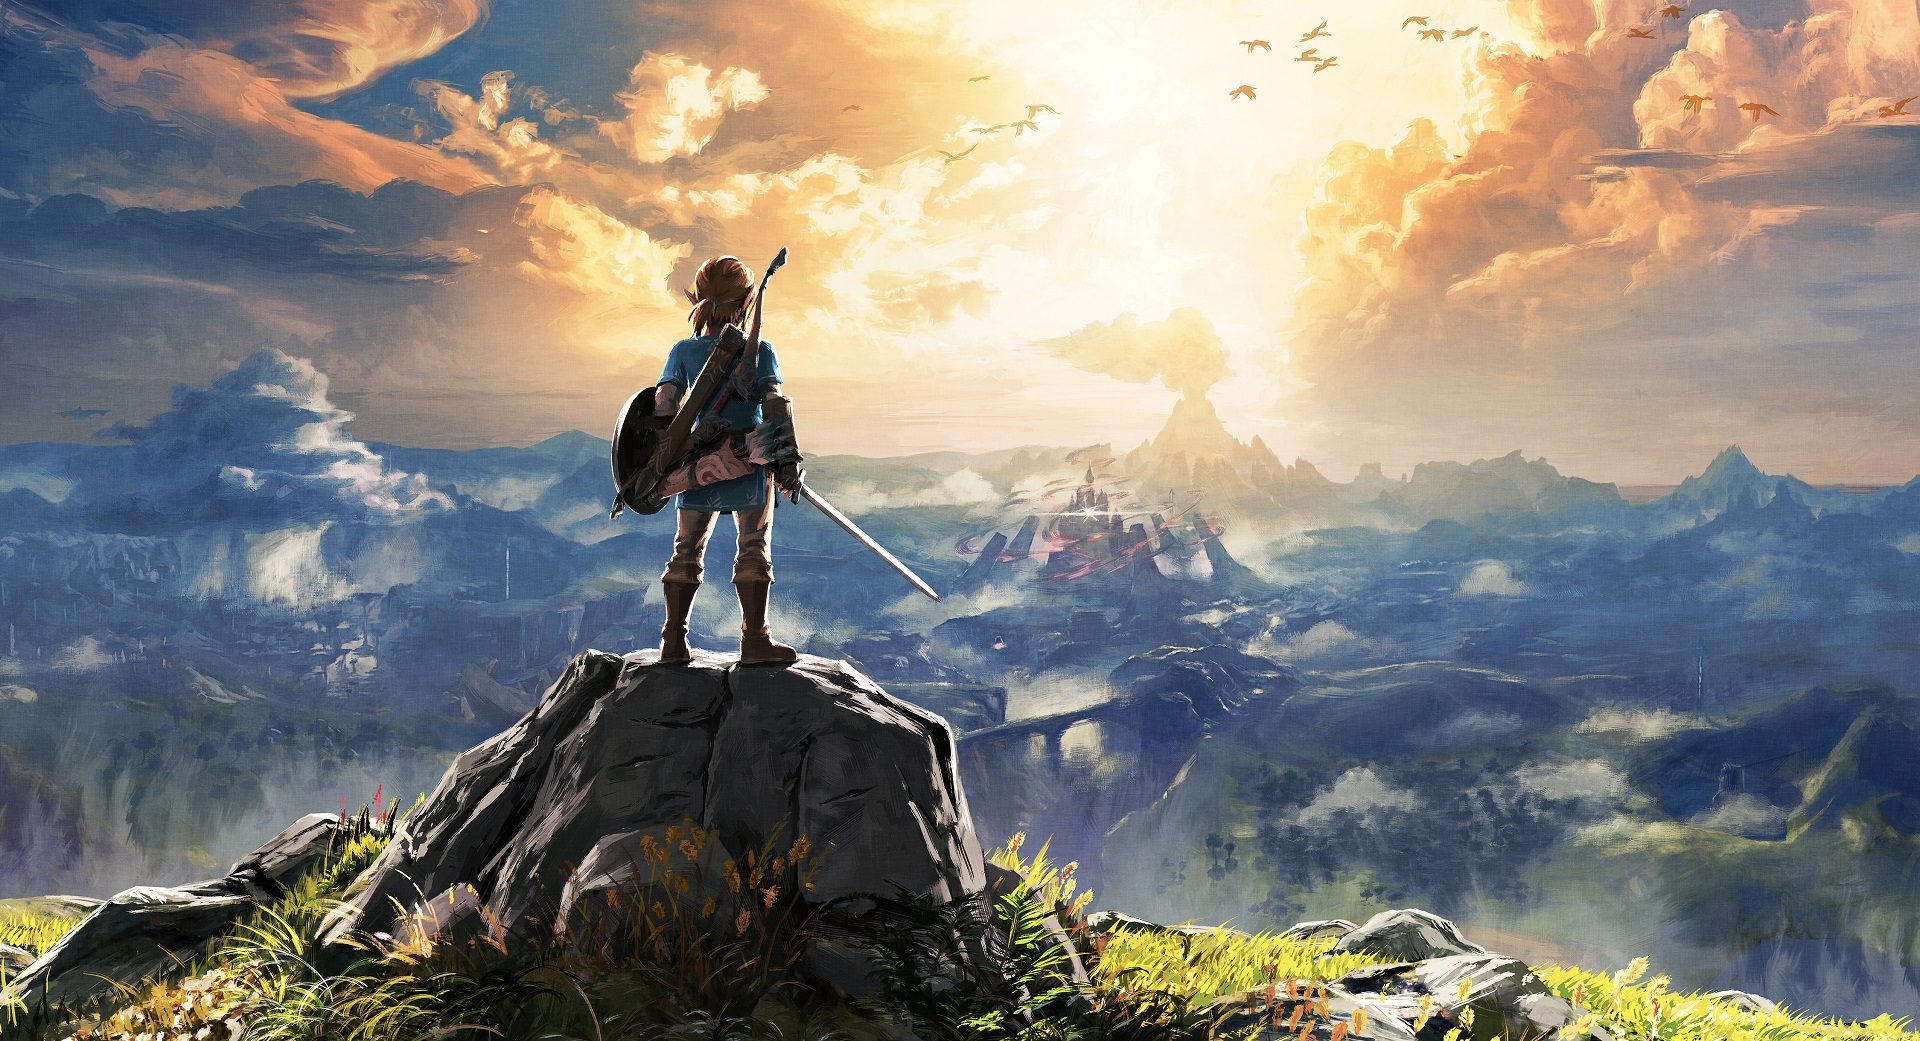 yuzu early access The Legend of Zelda: Breath of the Wild - Nintendo Switch  